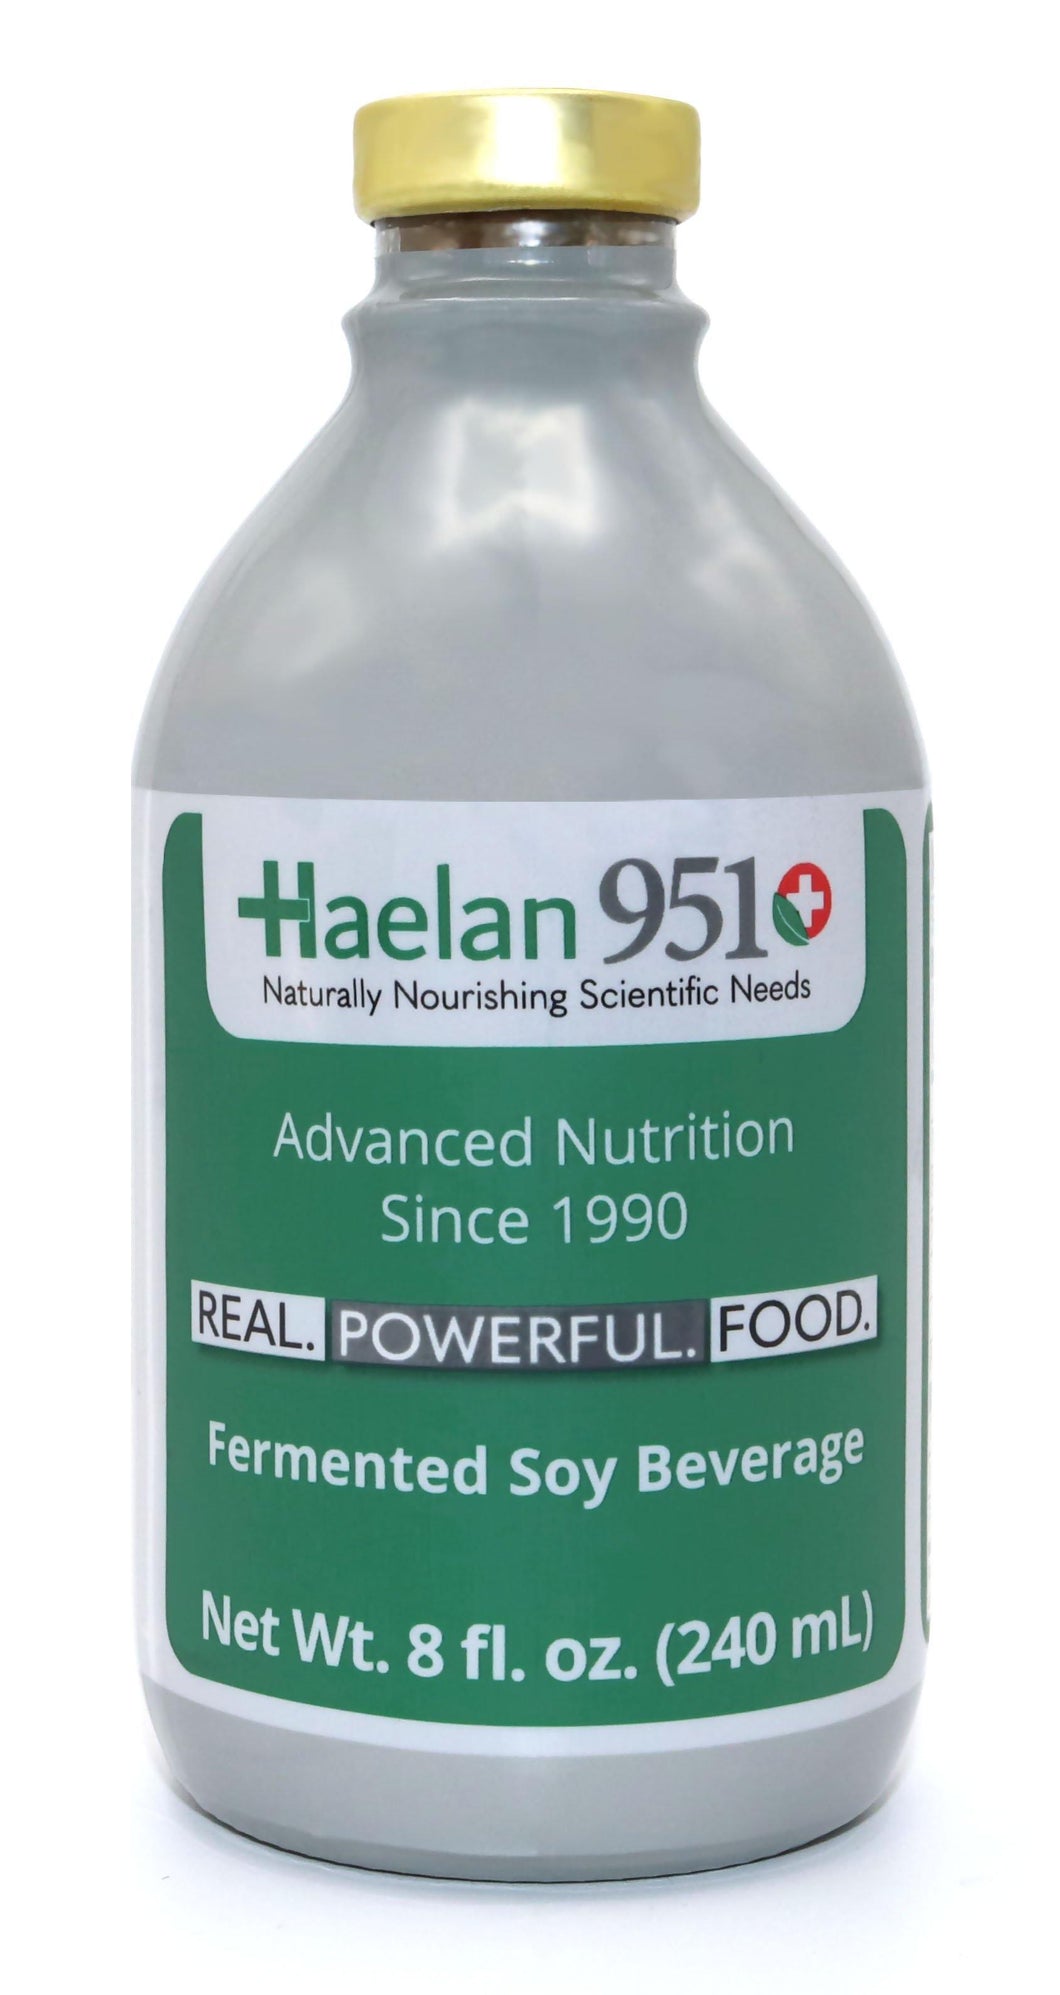 Haelan 951 - Special Offer - Haelan Products Inc.